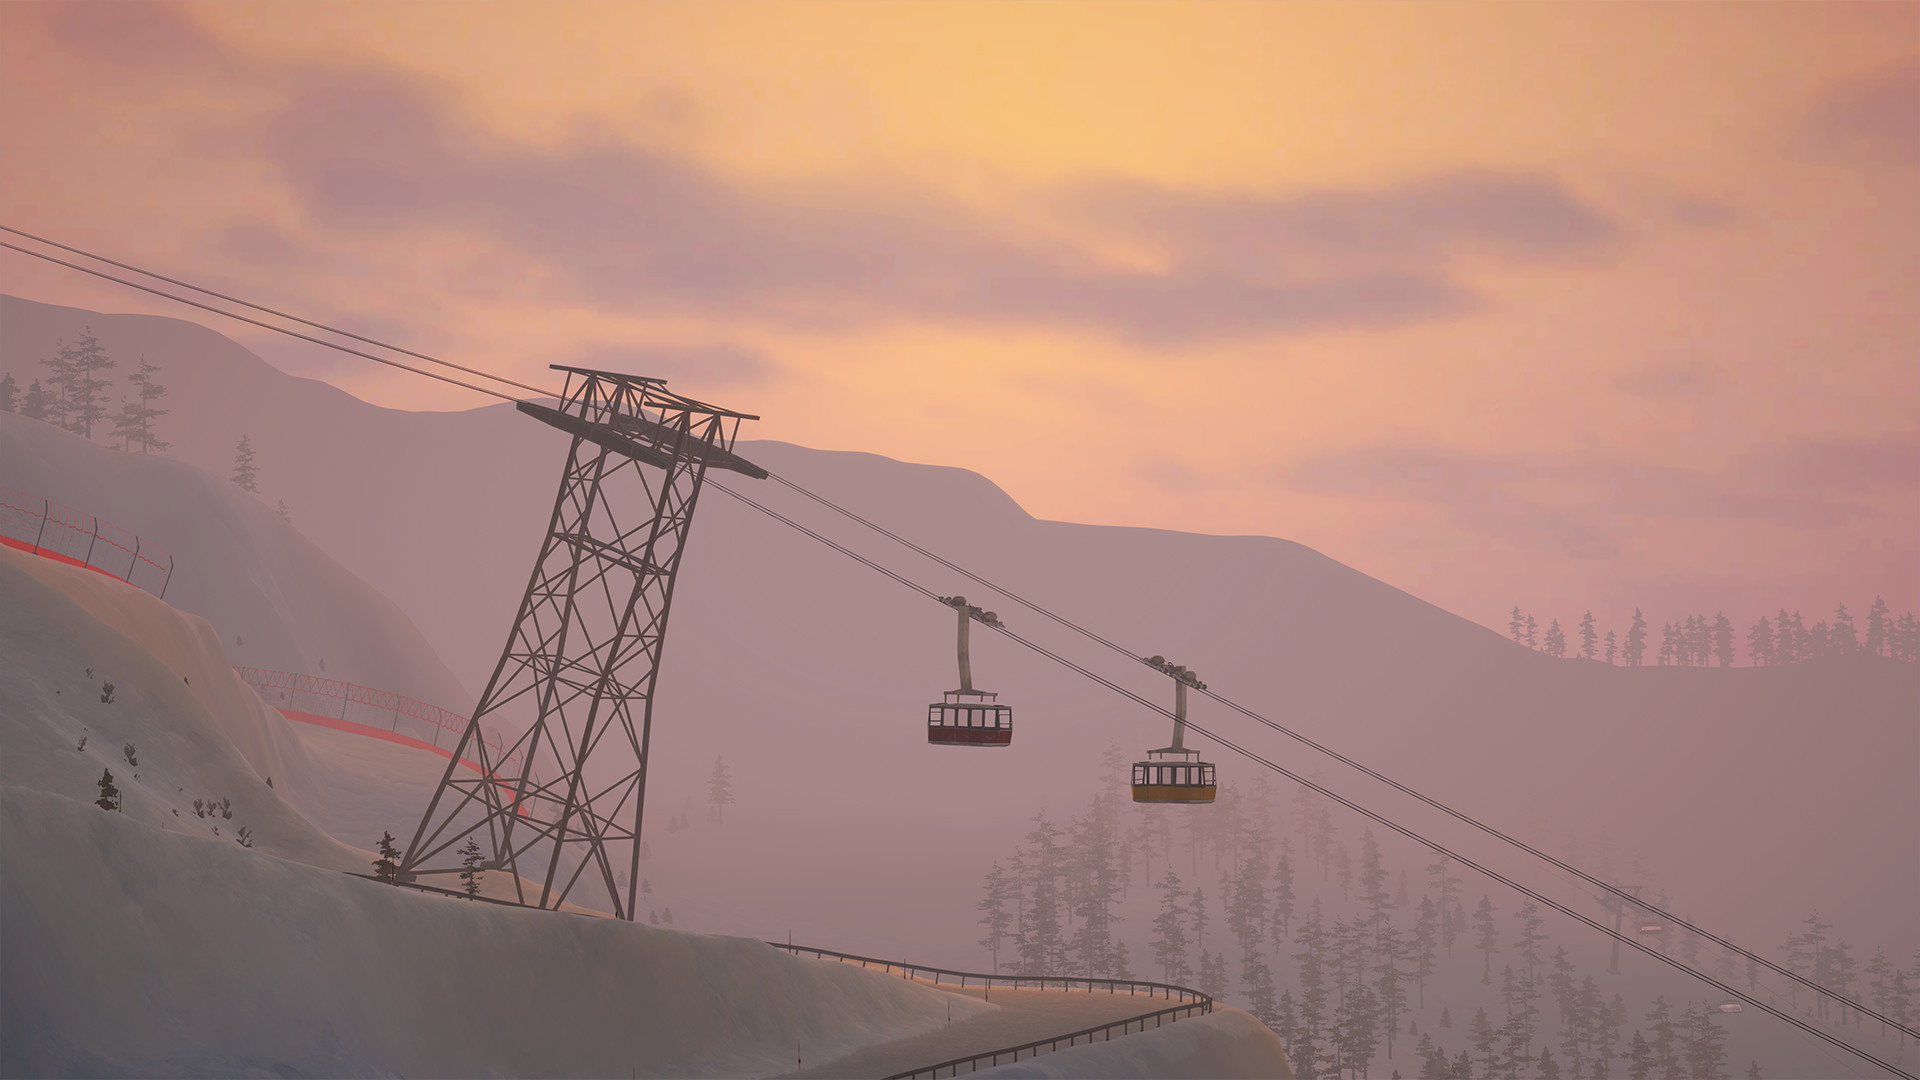 Alpine - The Simulation Game - screenshot 3